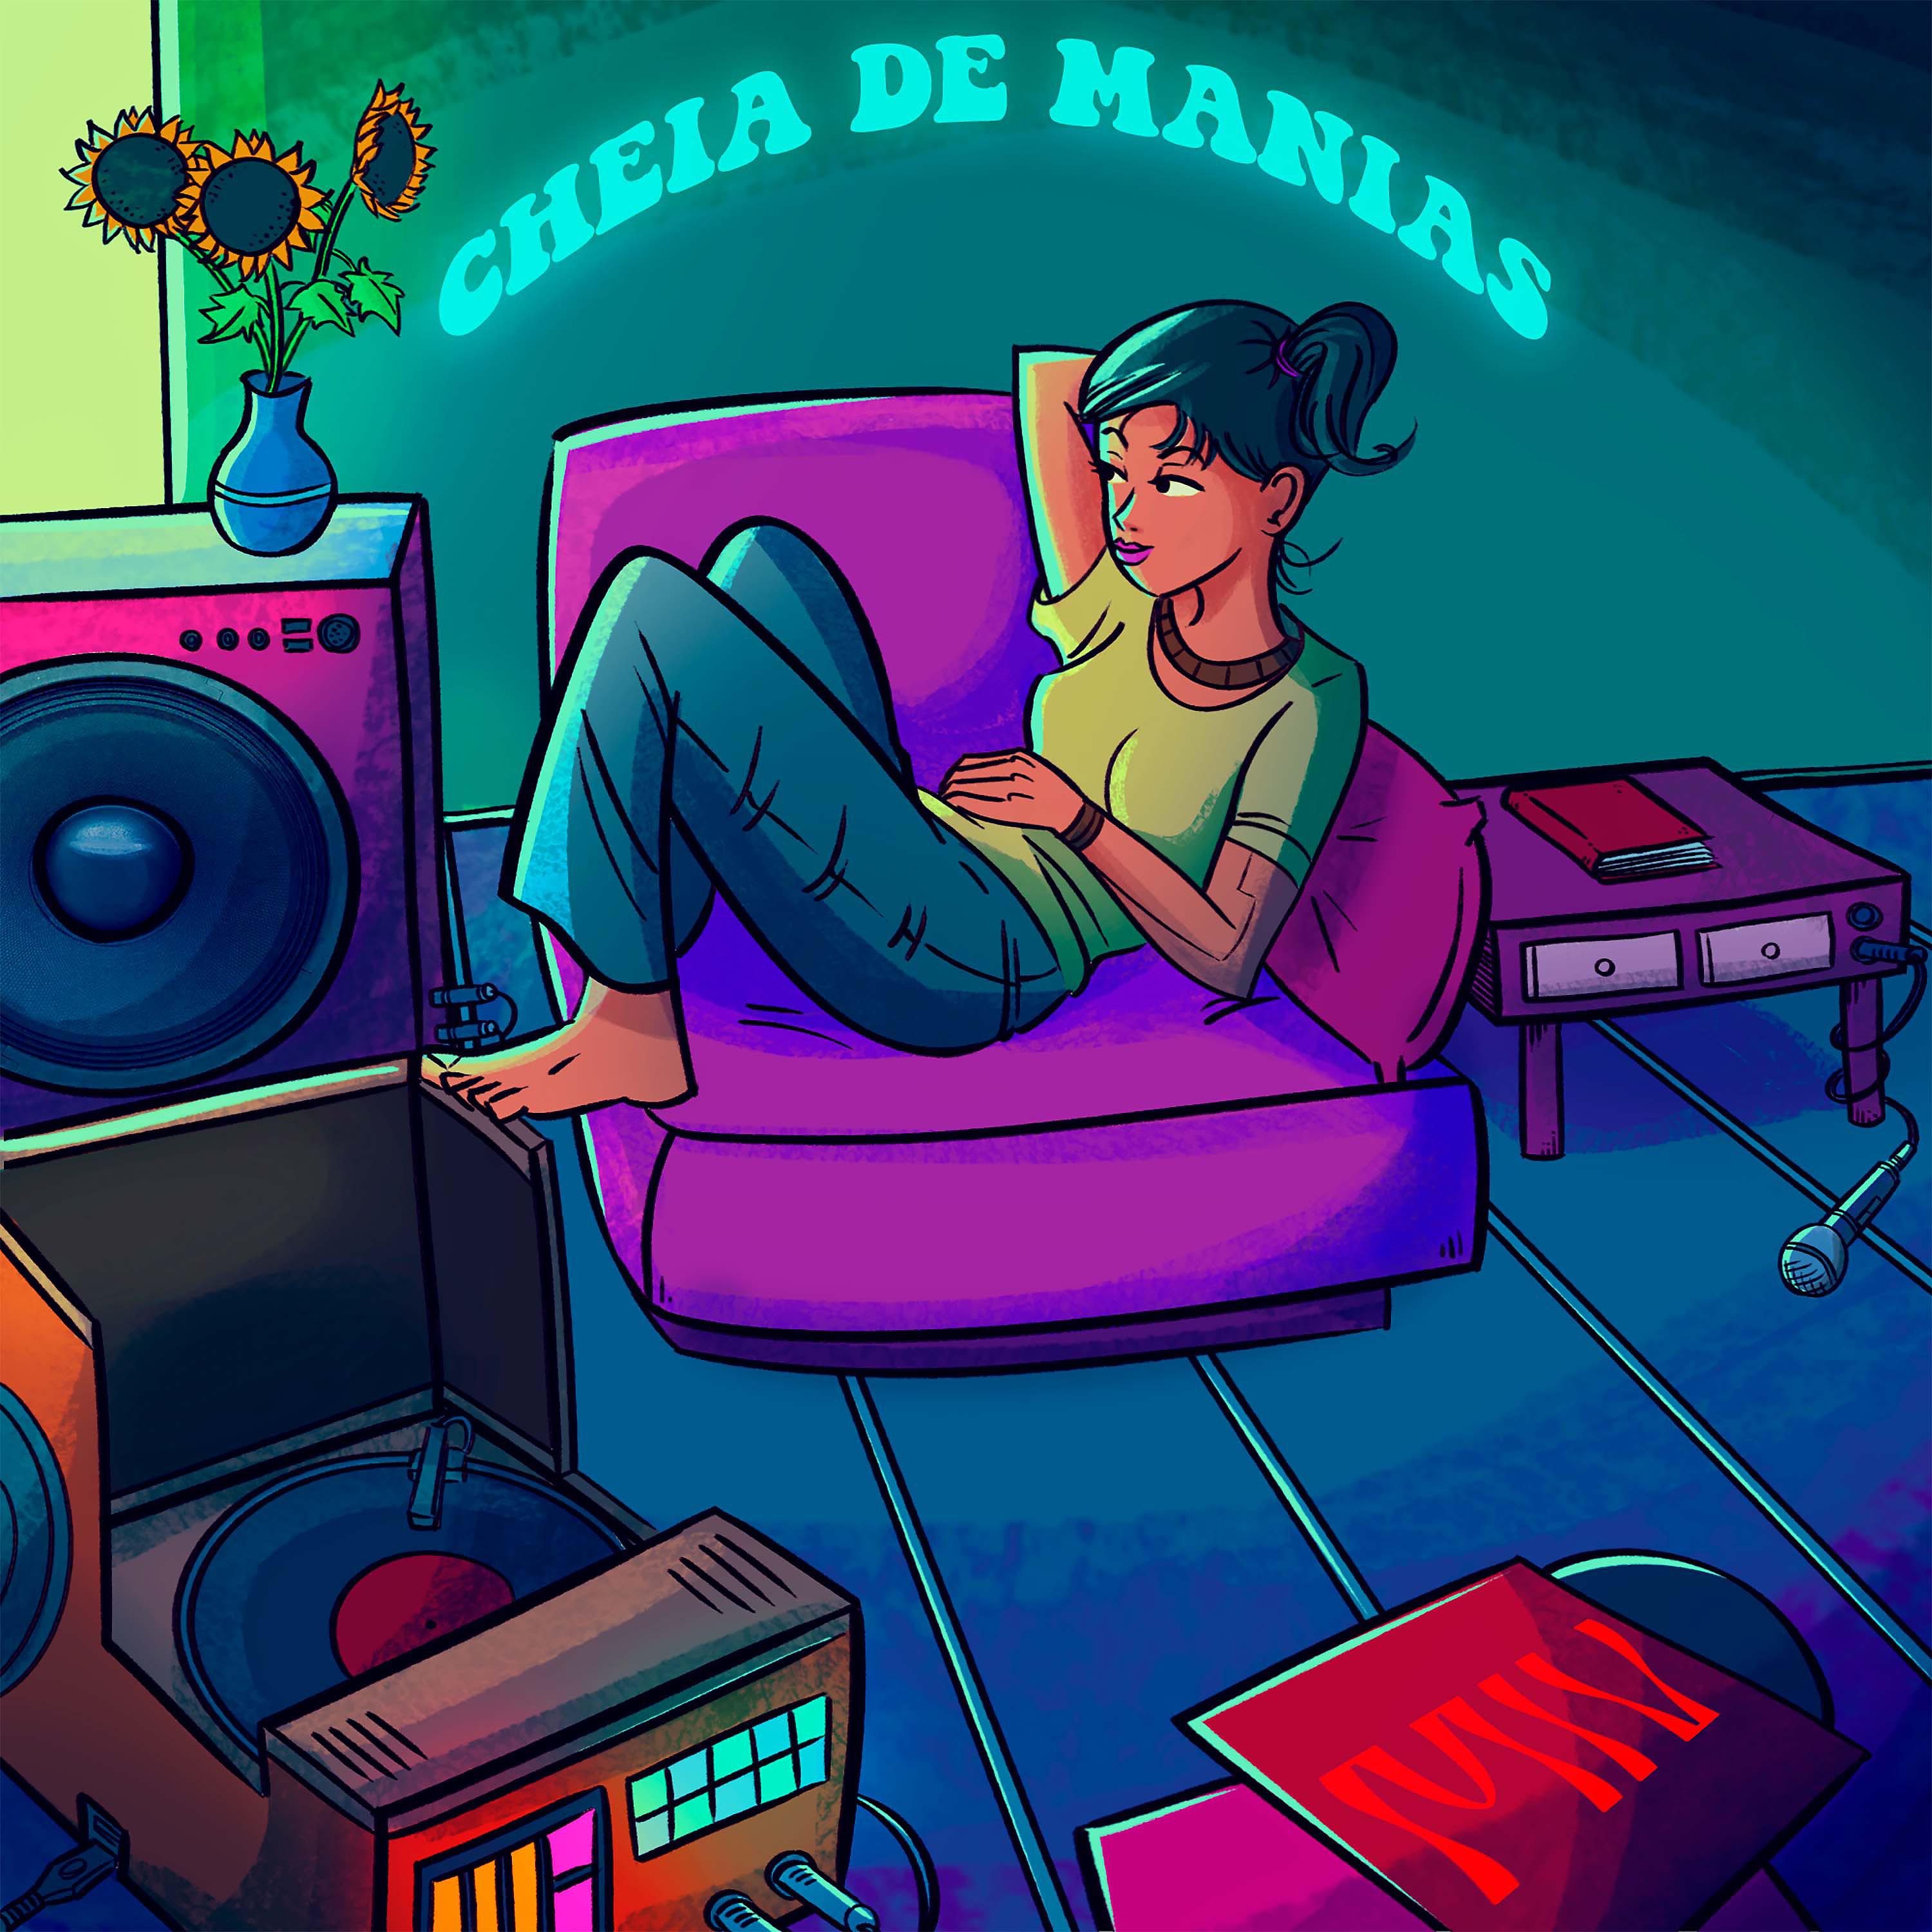 Постер альбома Cheia de Manias